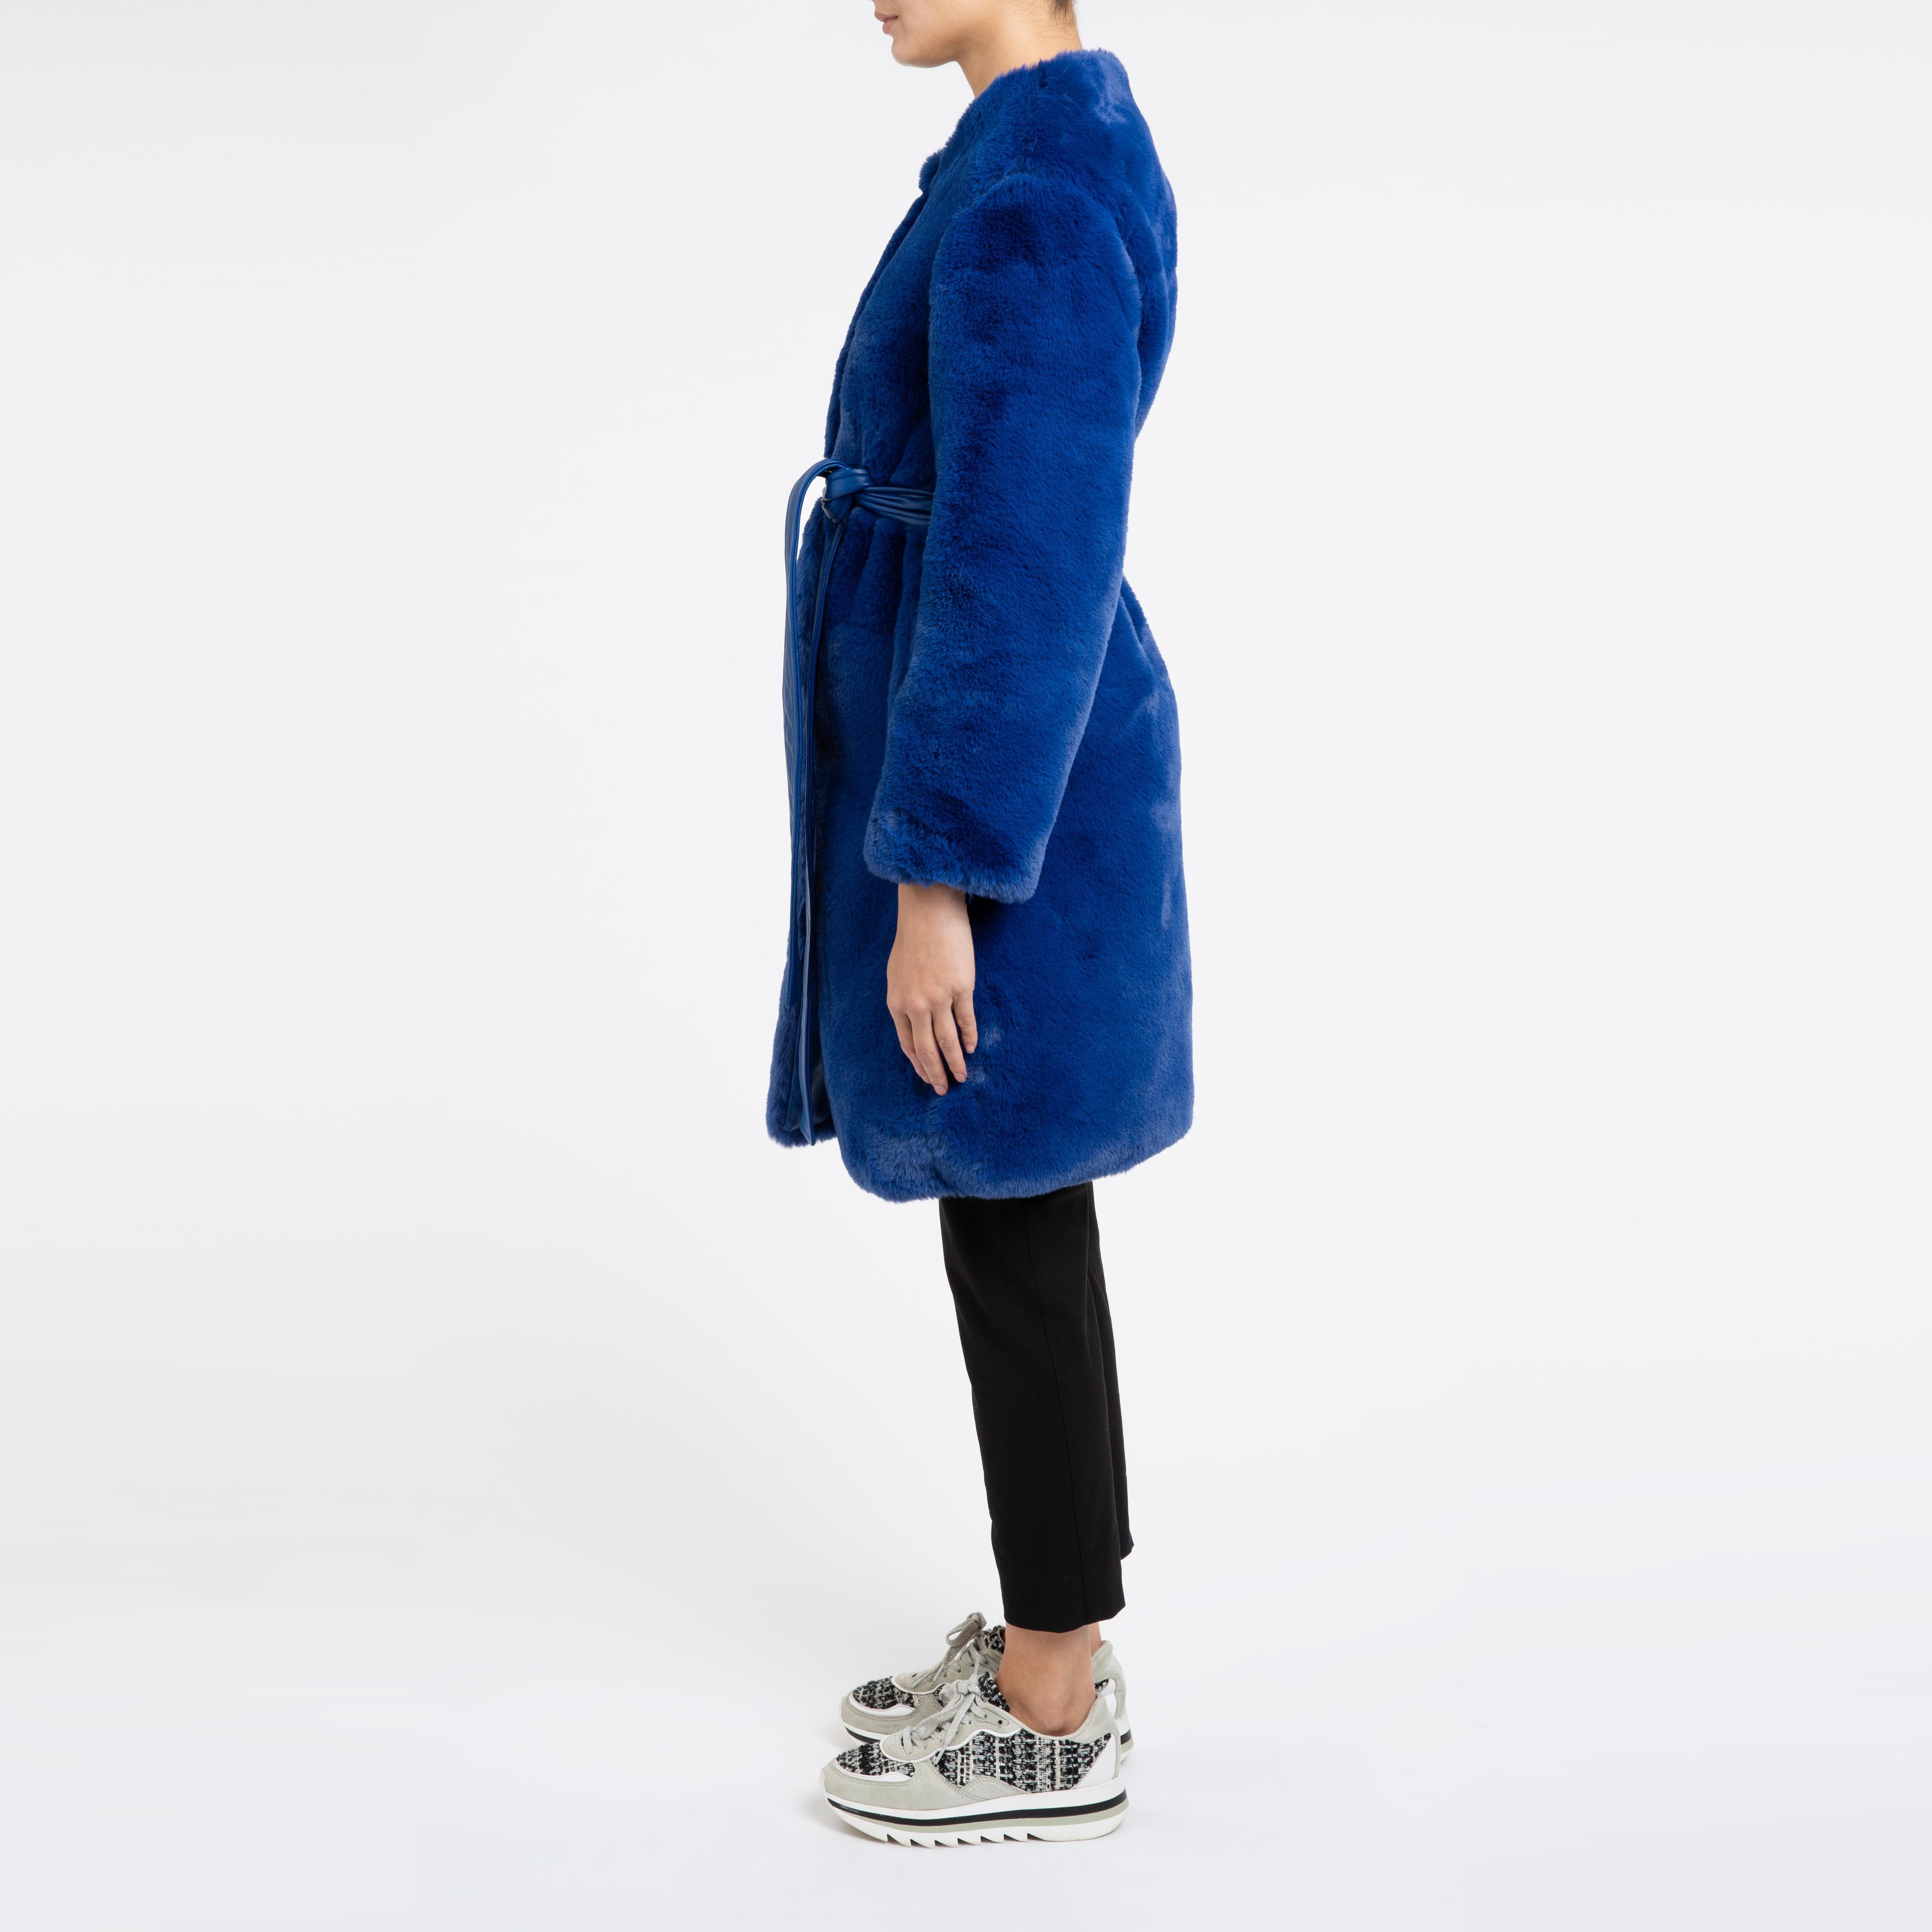 Verheyen London Serena  Collarless Faux Fur Coat in Blue - Size uk 8 For Sale 3